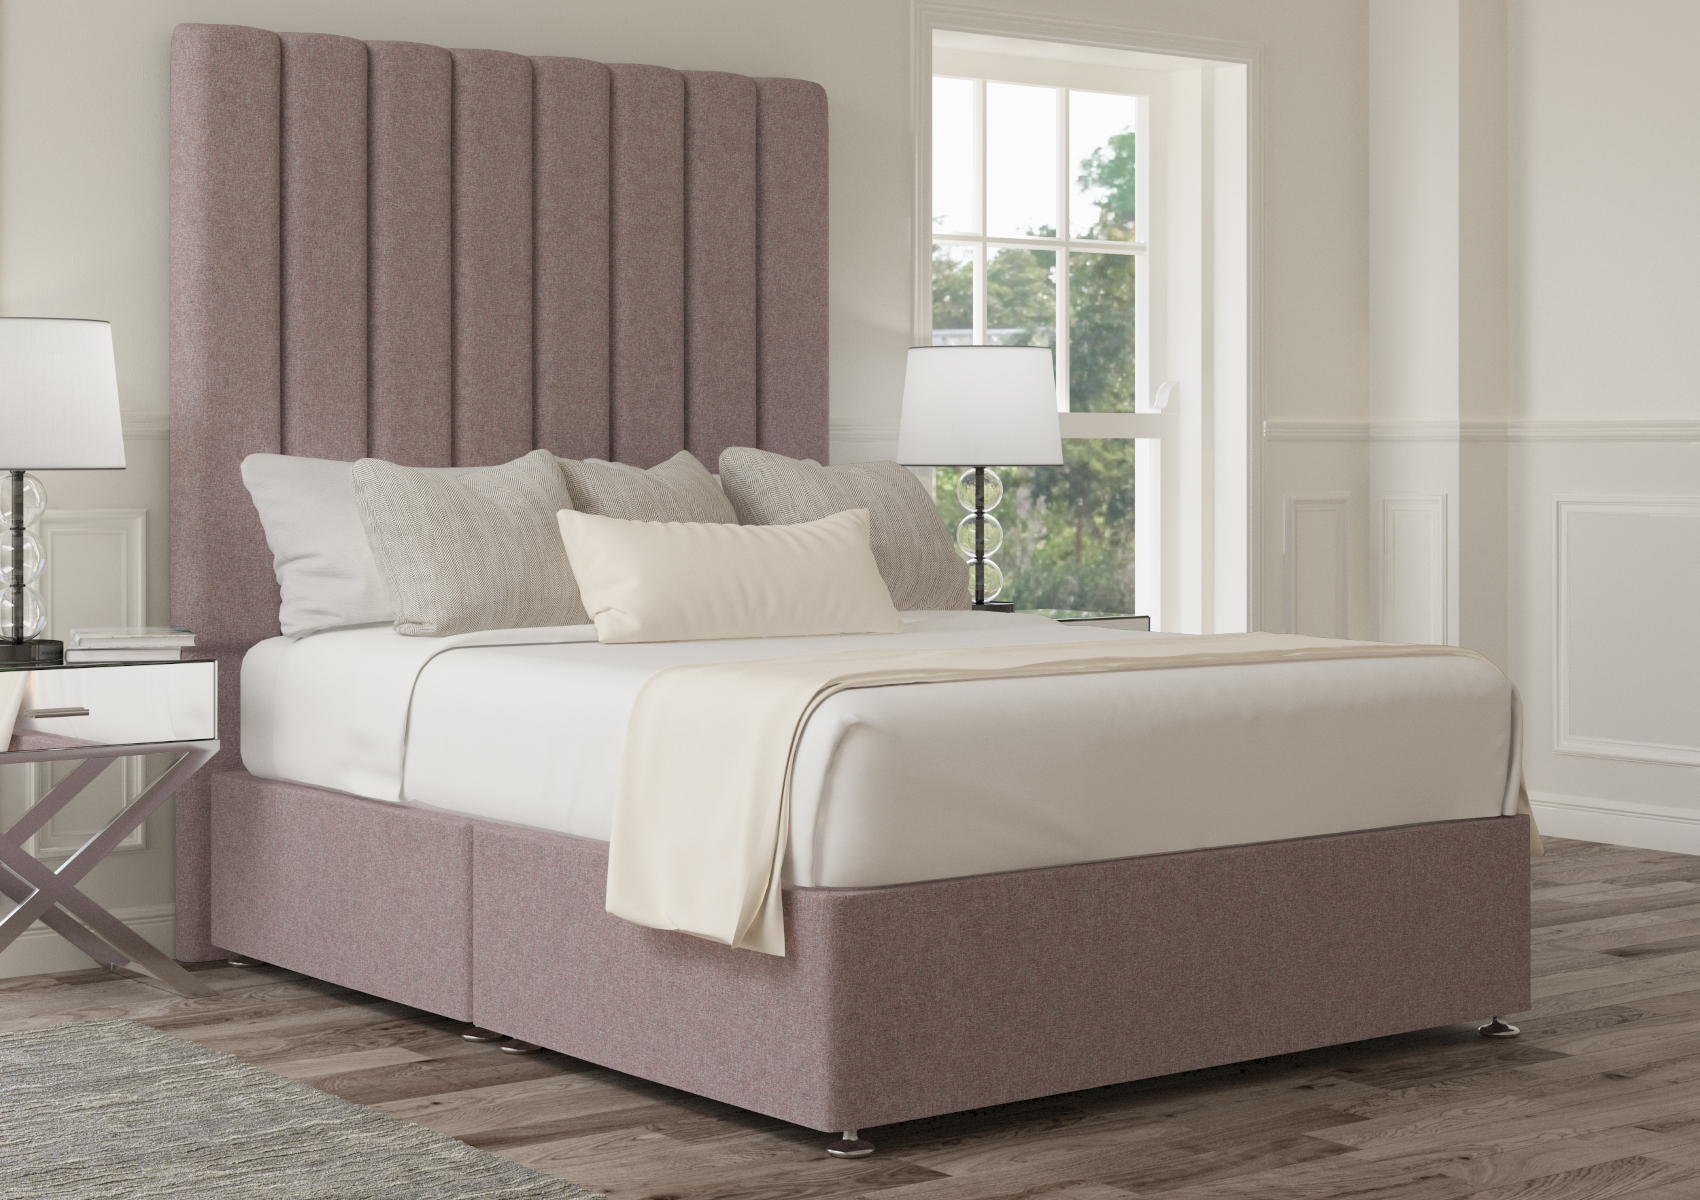 View Esme Hugo Royal Upholstered King Size Bed Time4Sleep information